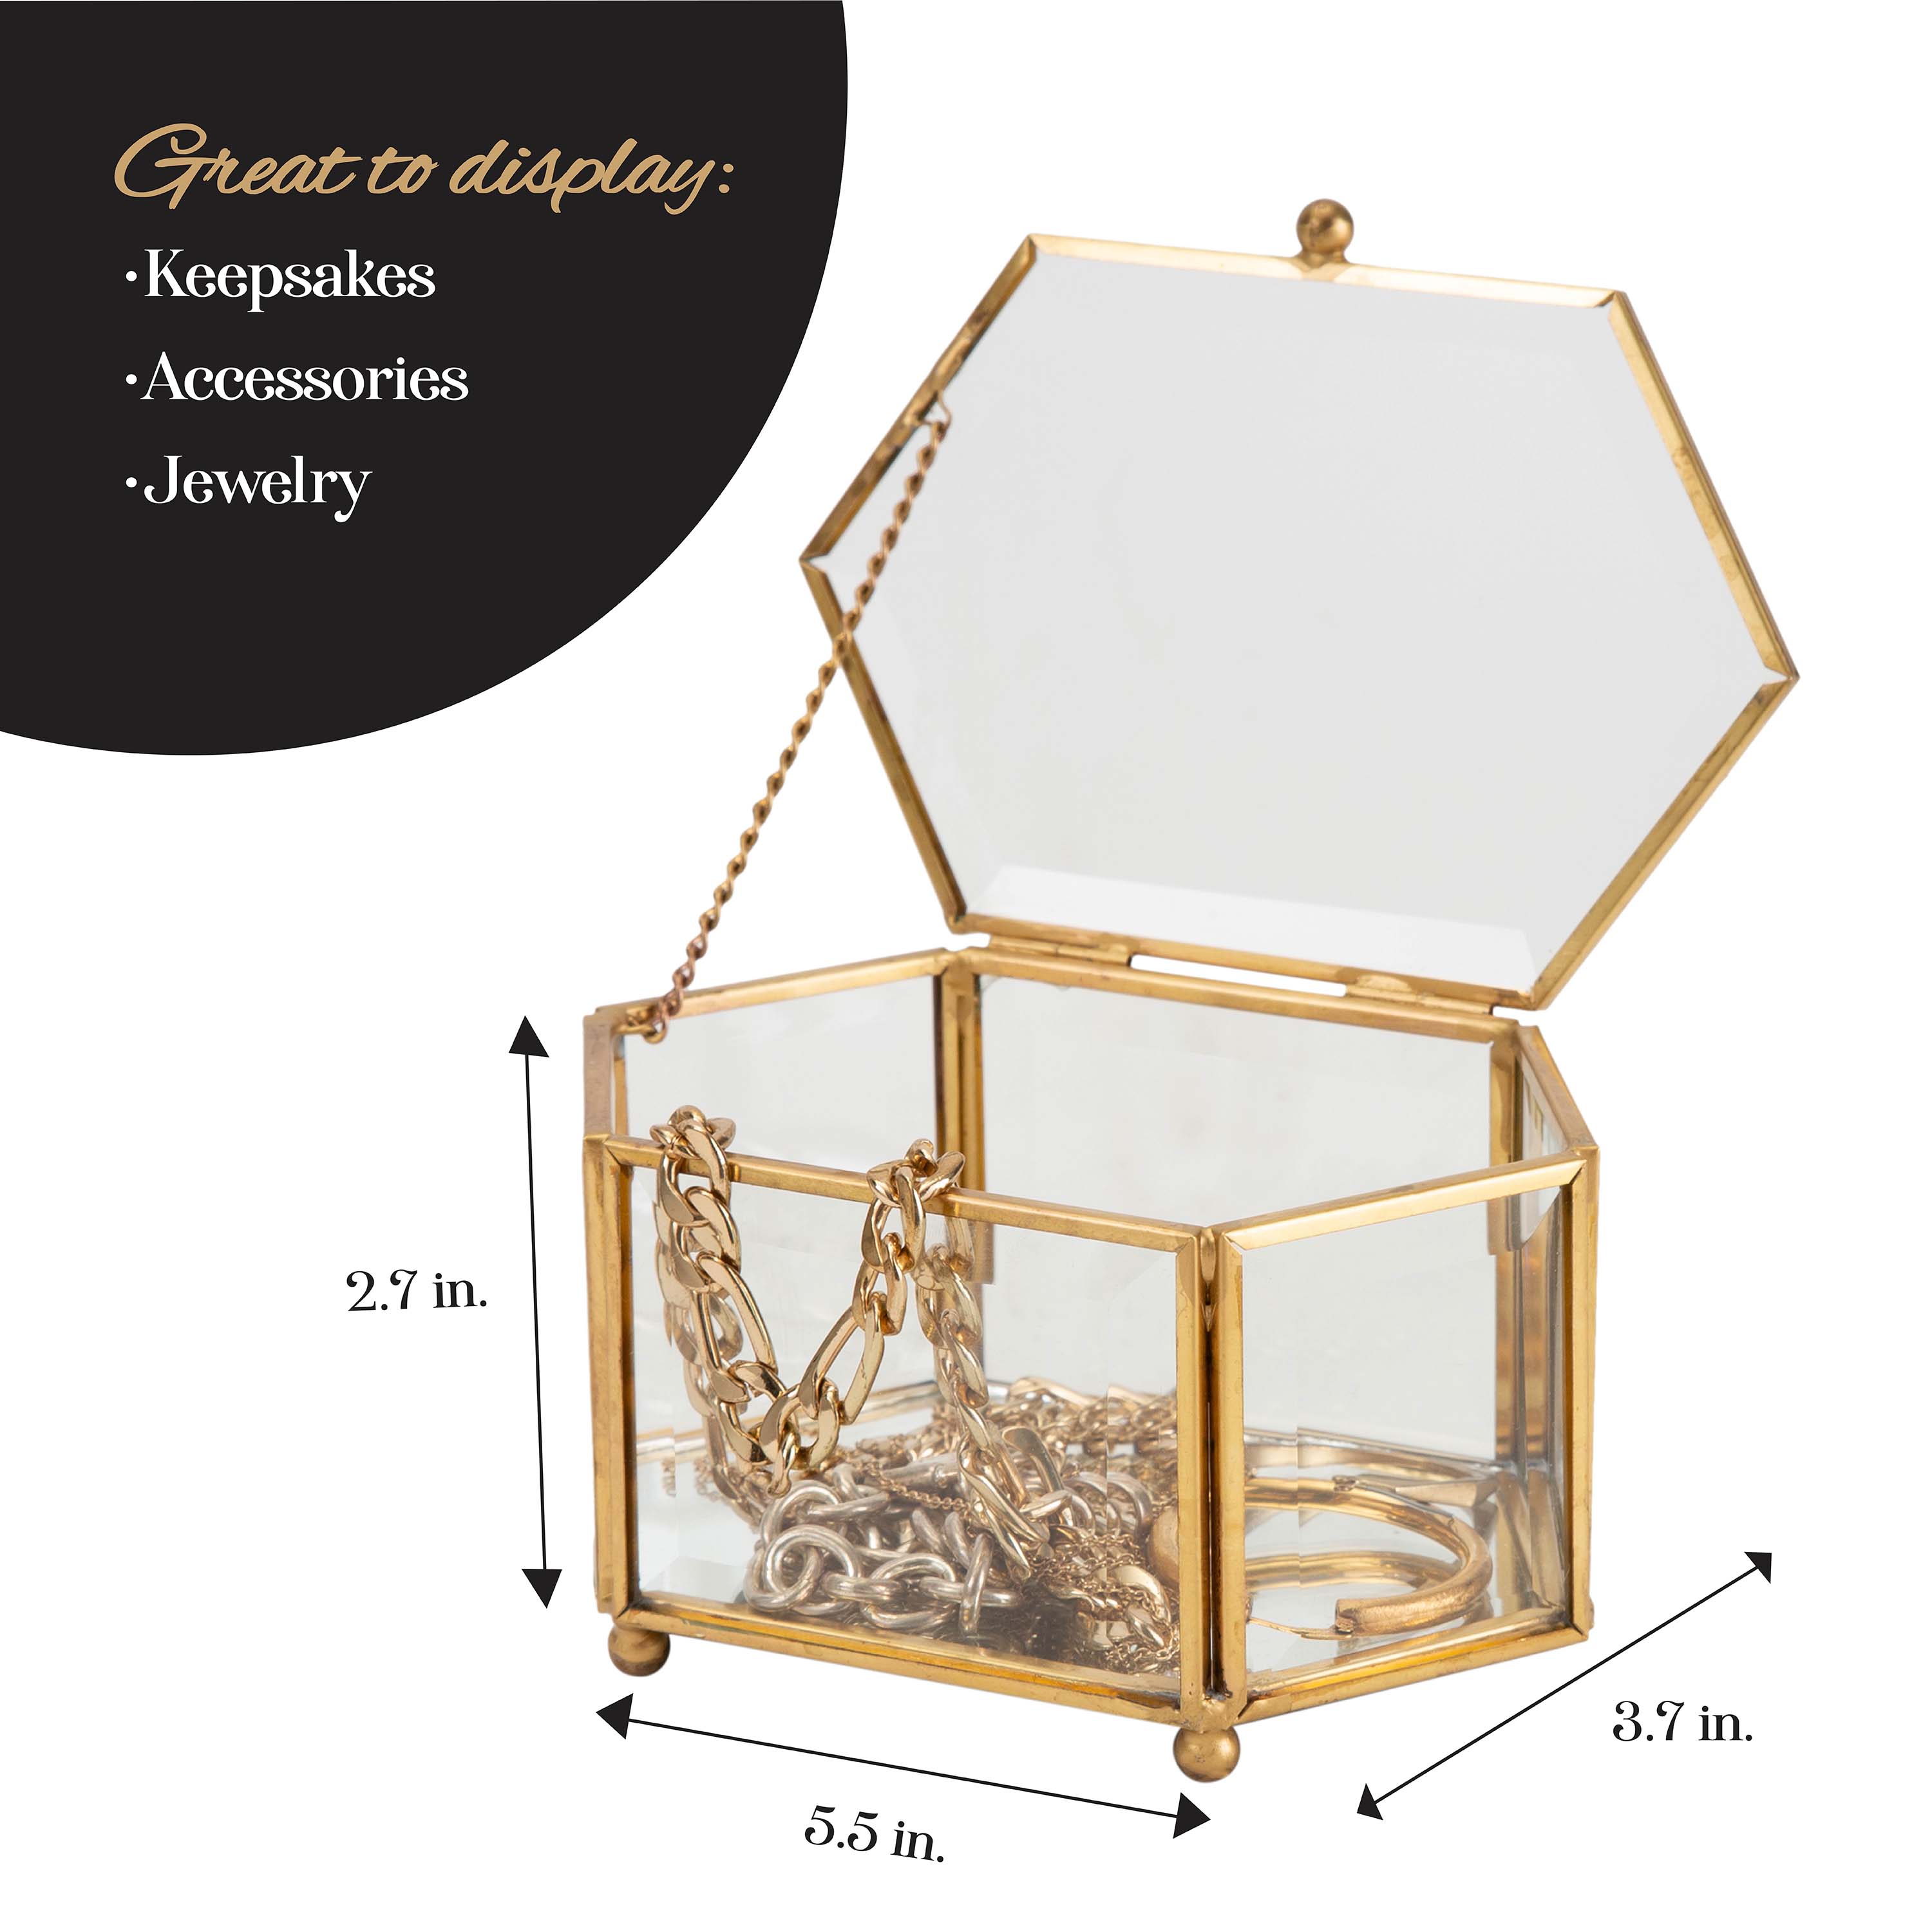 Home Details Vintage Mirrored Bottom Diamond Shape Glass Keepsake Box in Gold - image 4 of 9